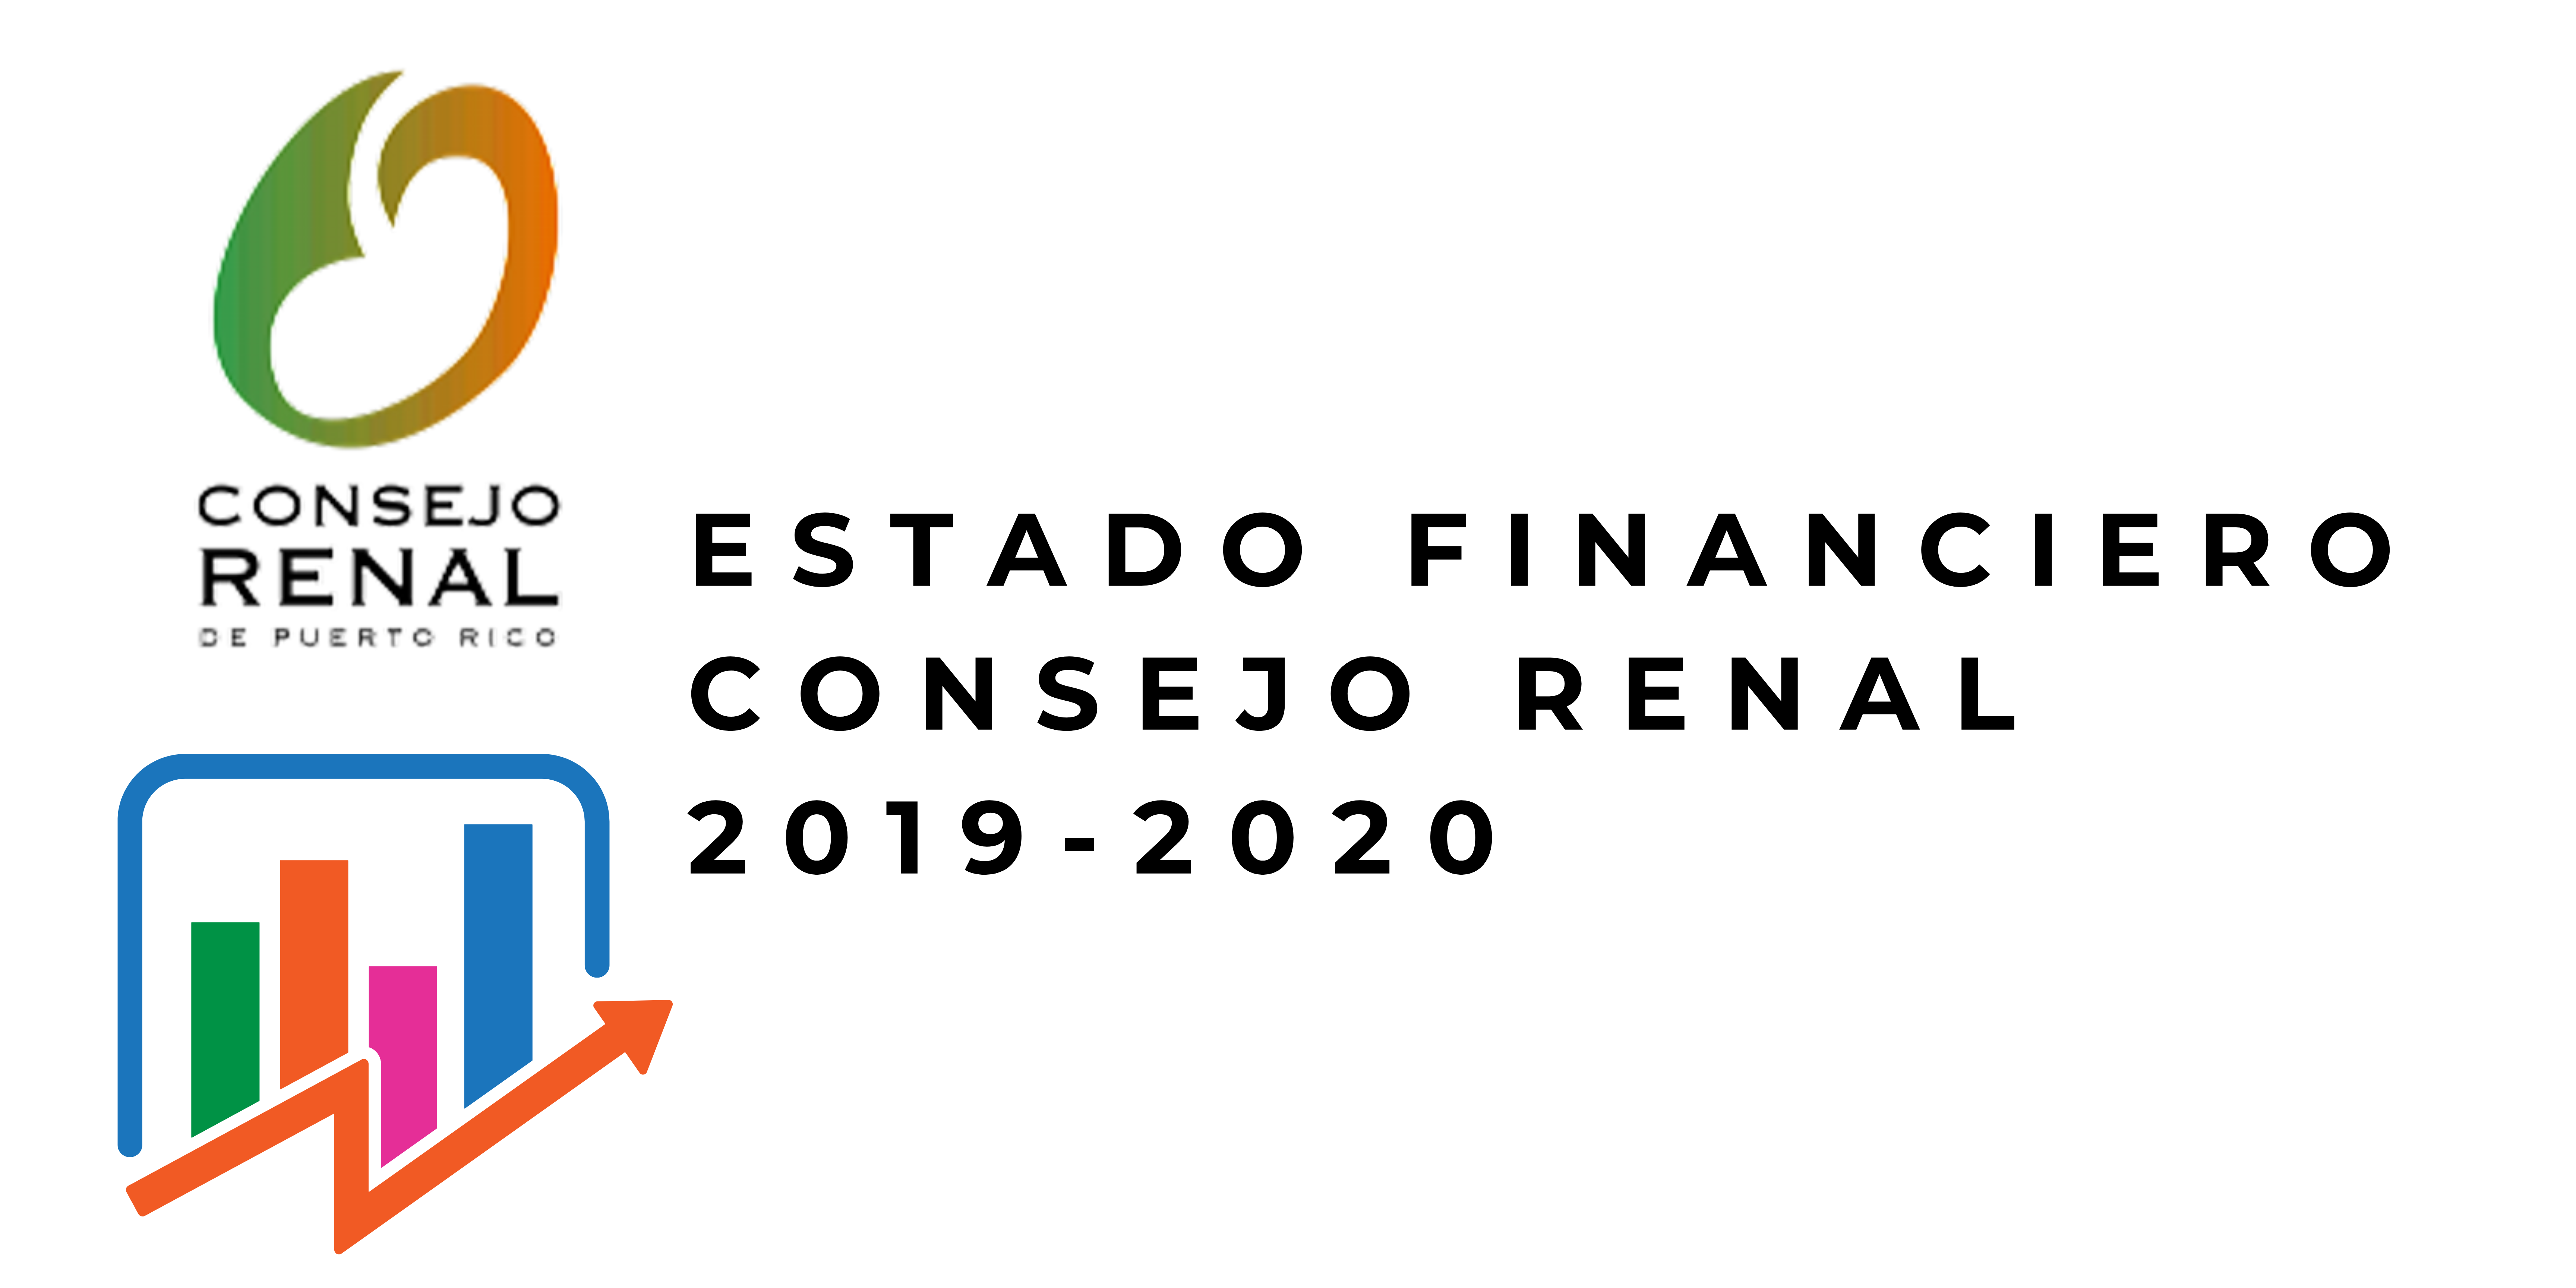 Estado Financiero Consejo Renal logo2019 2020